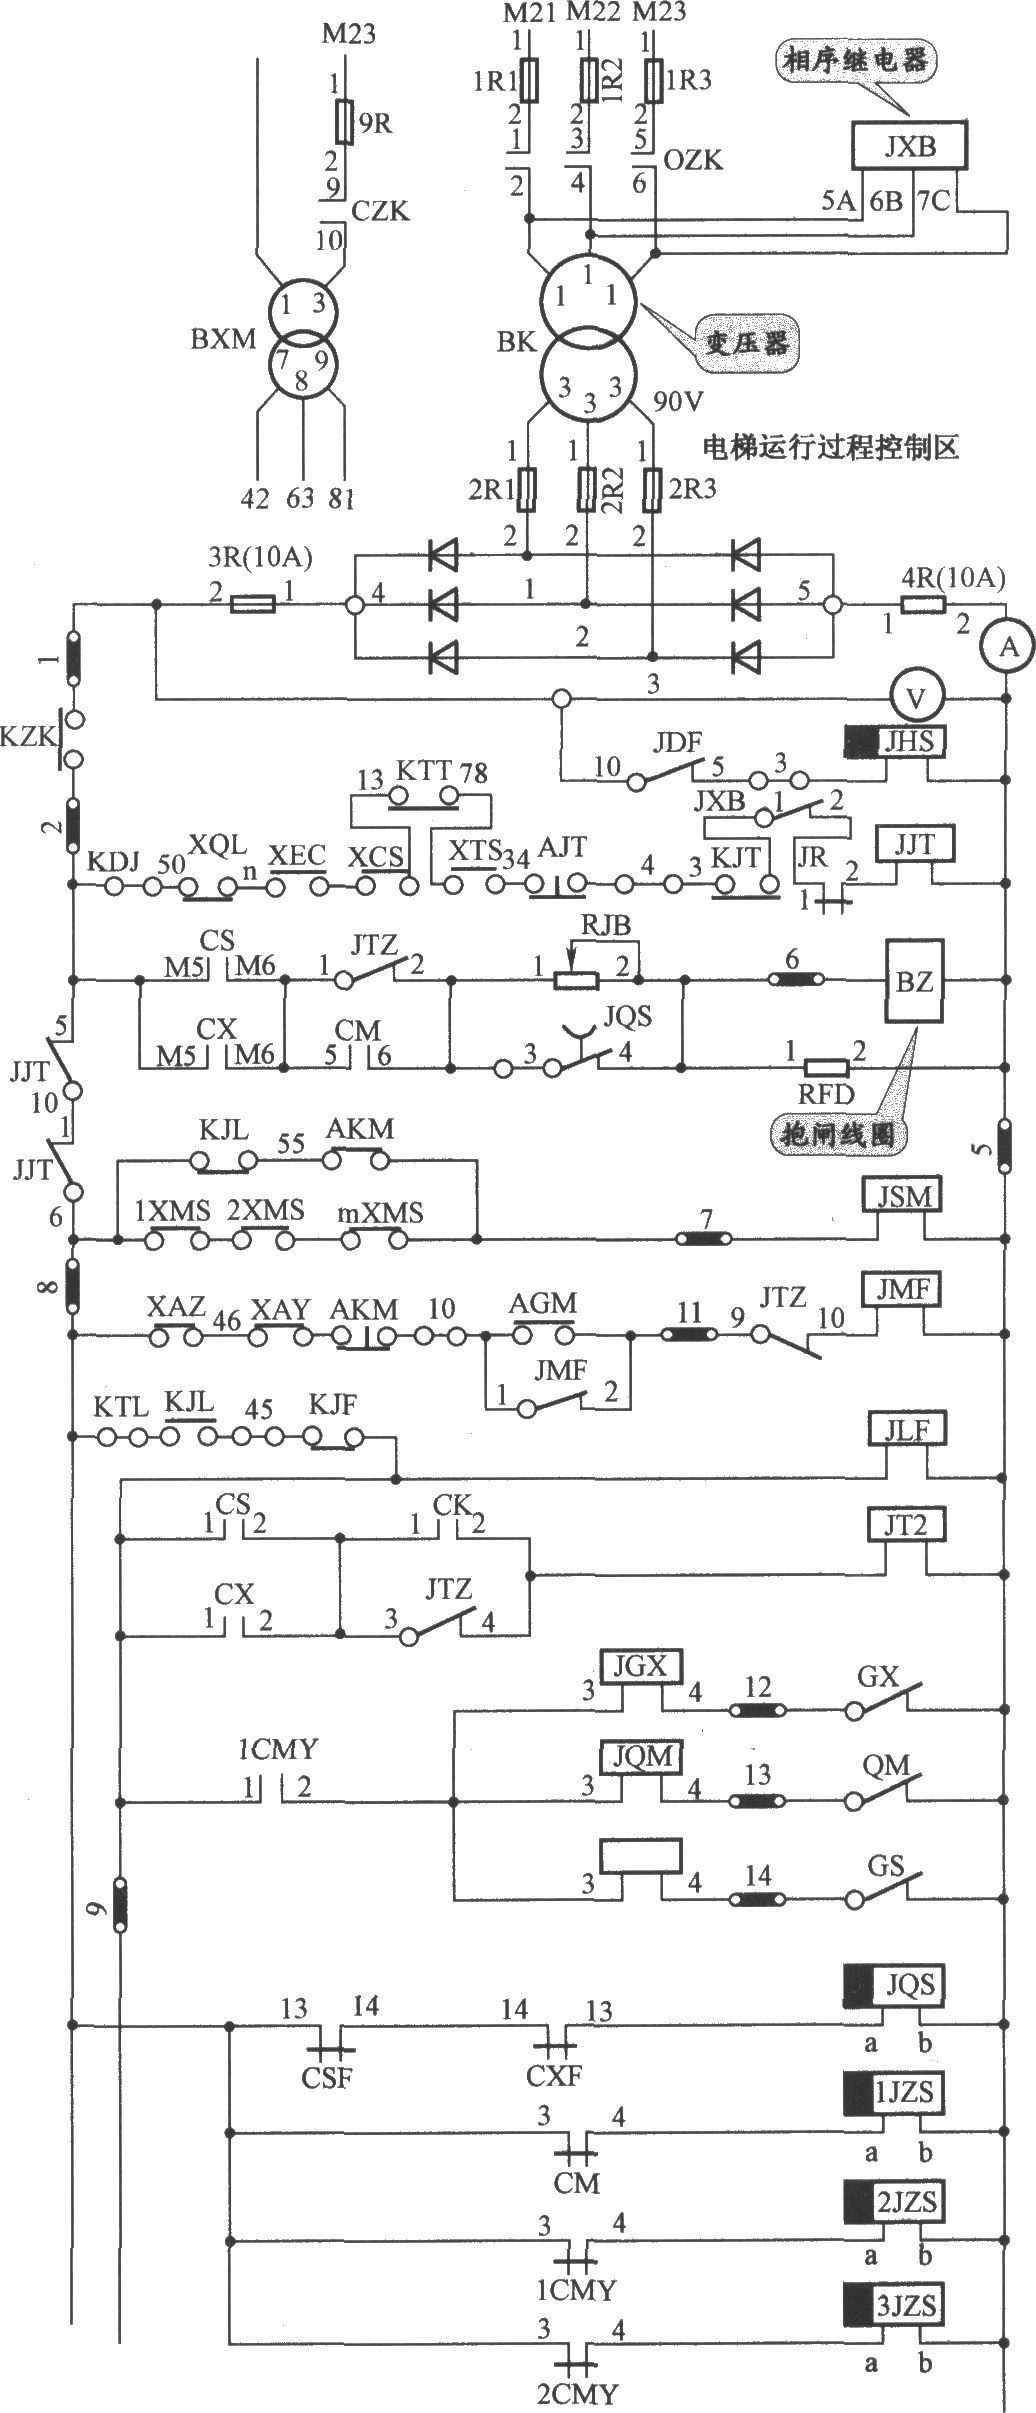 JKH1-791 elevator control circuit (1) - Control_Circuit - Circuit